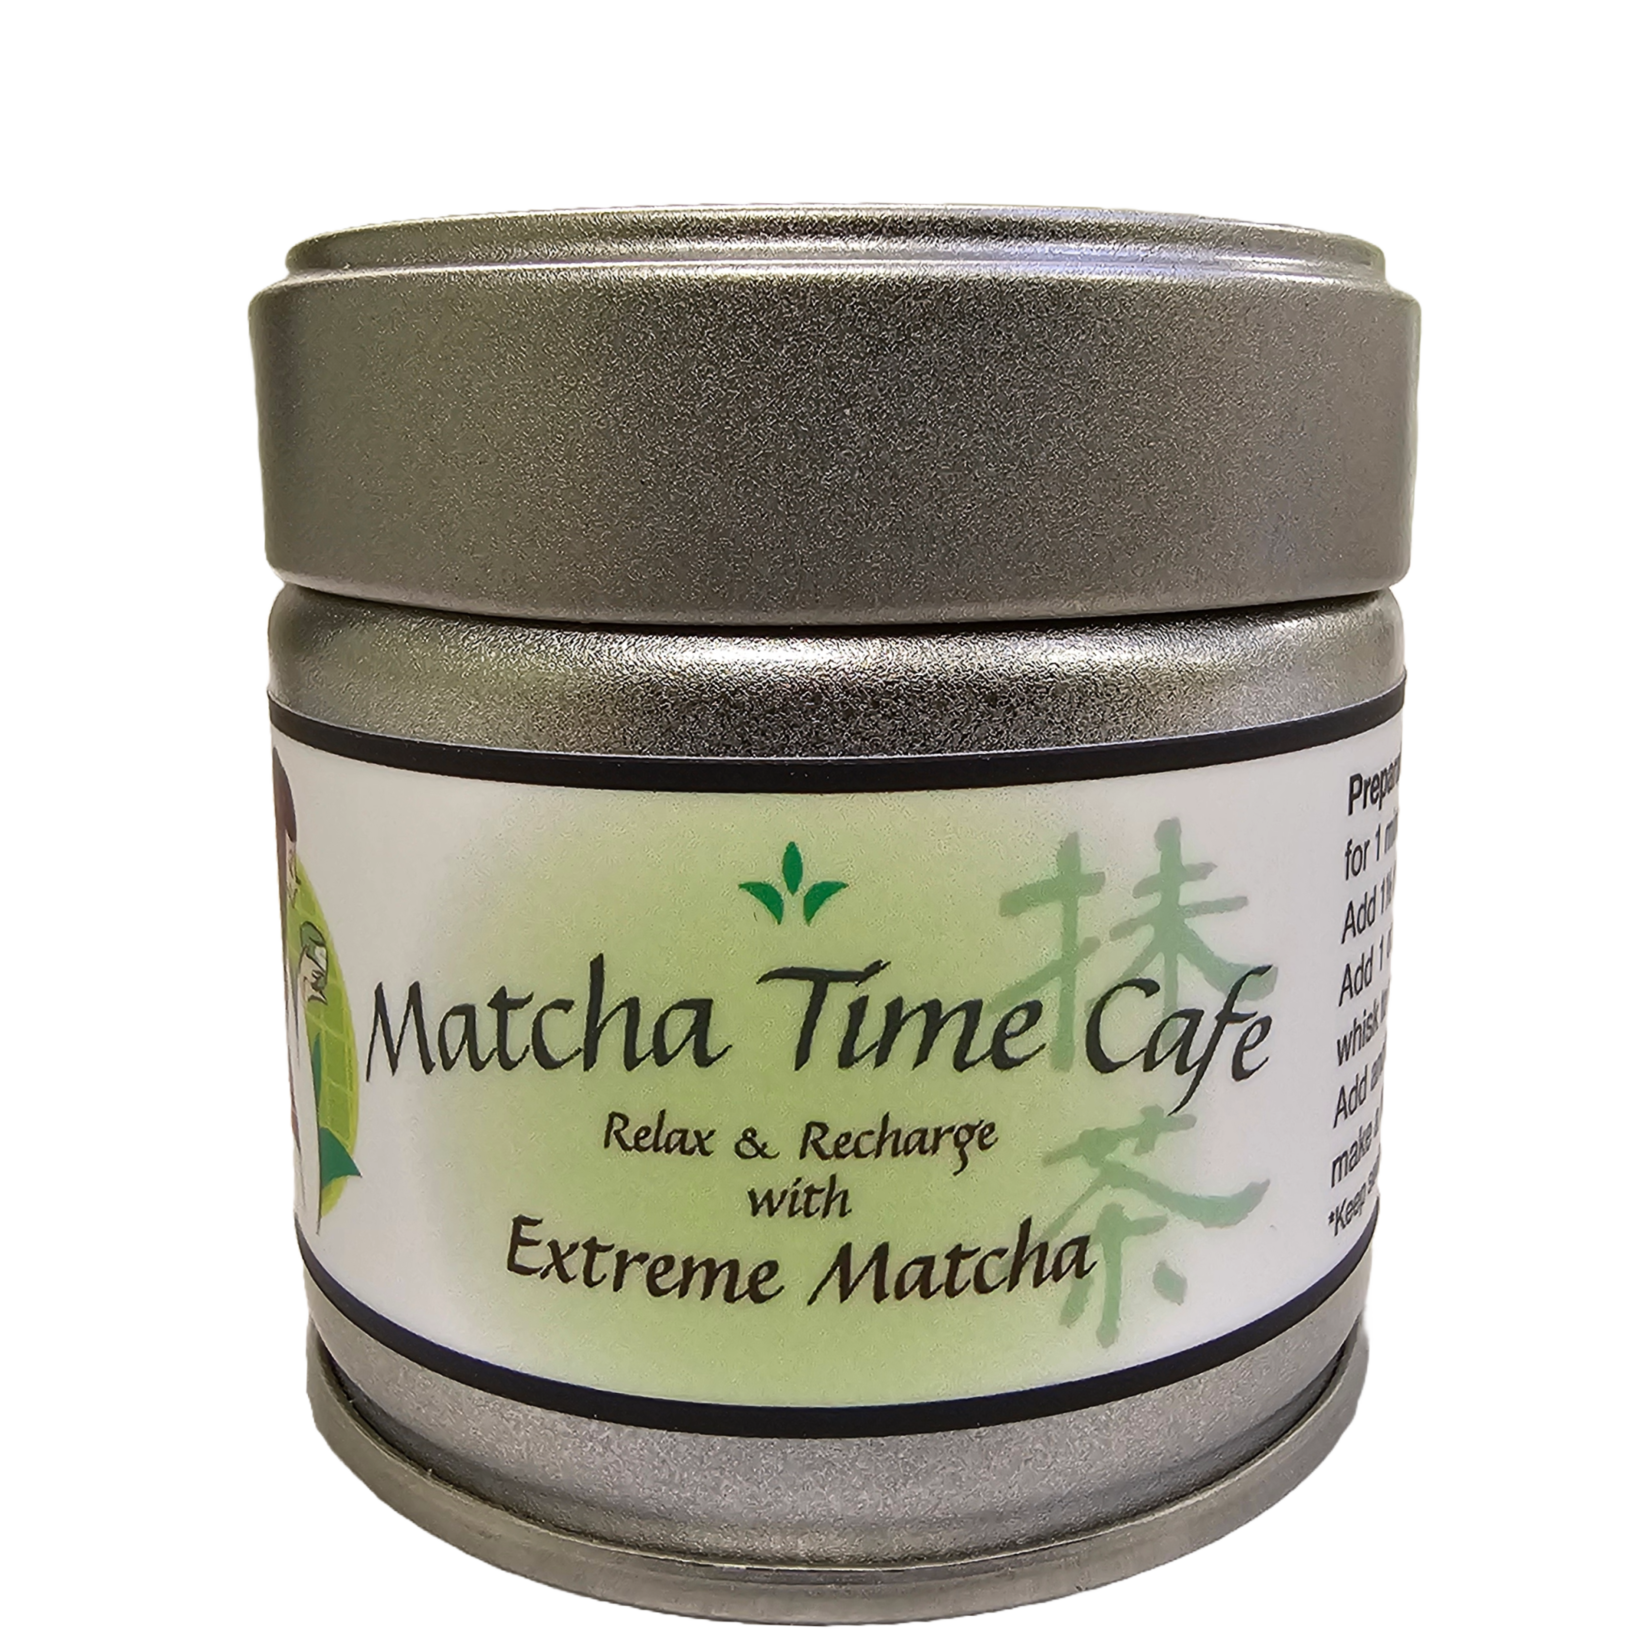 Matcha Time Cafe MTC "Extreme Matcha" Ceremonial Grade